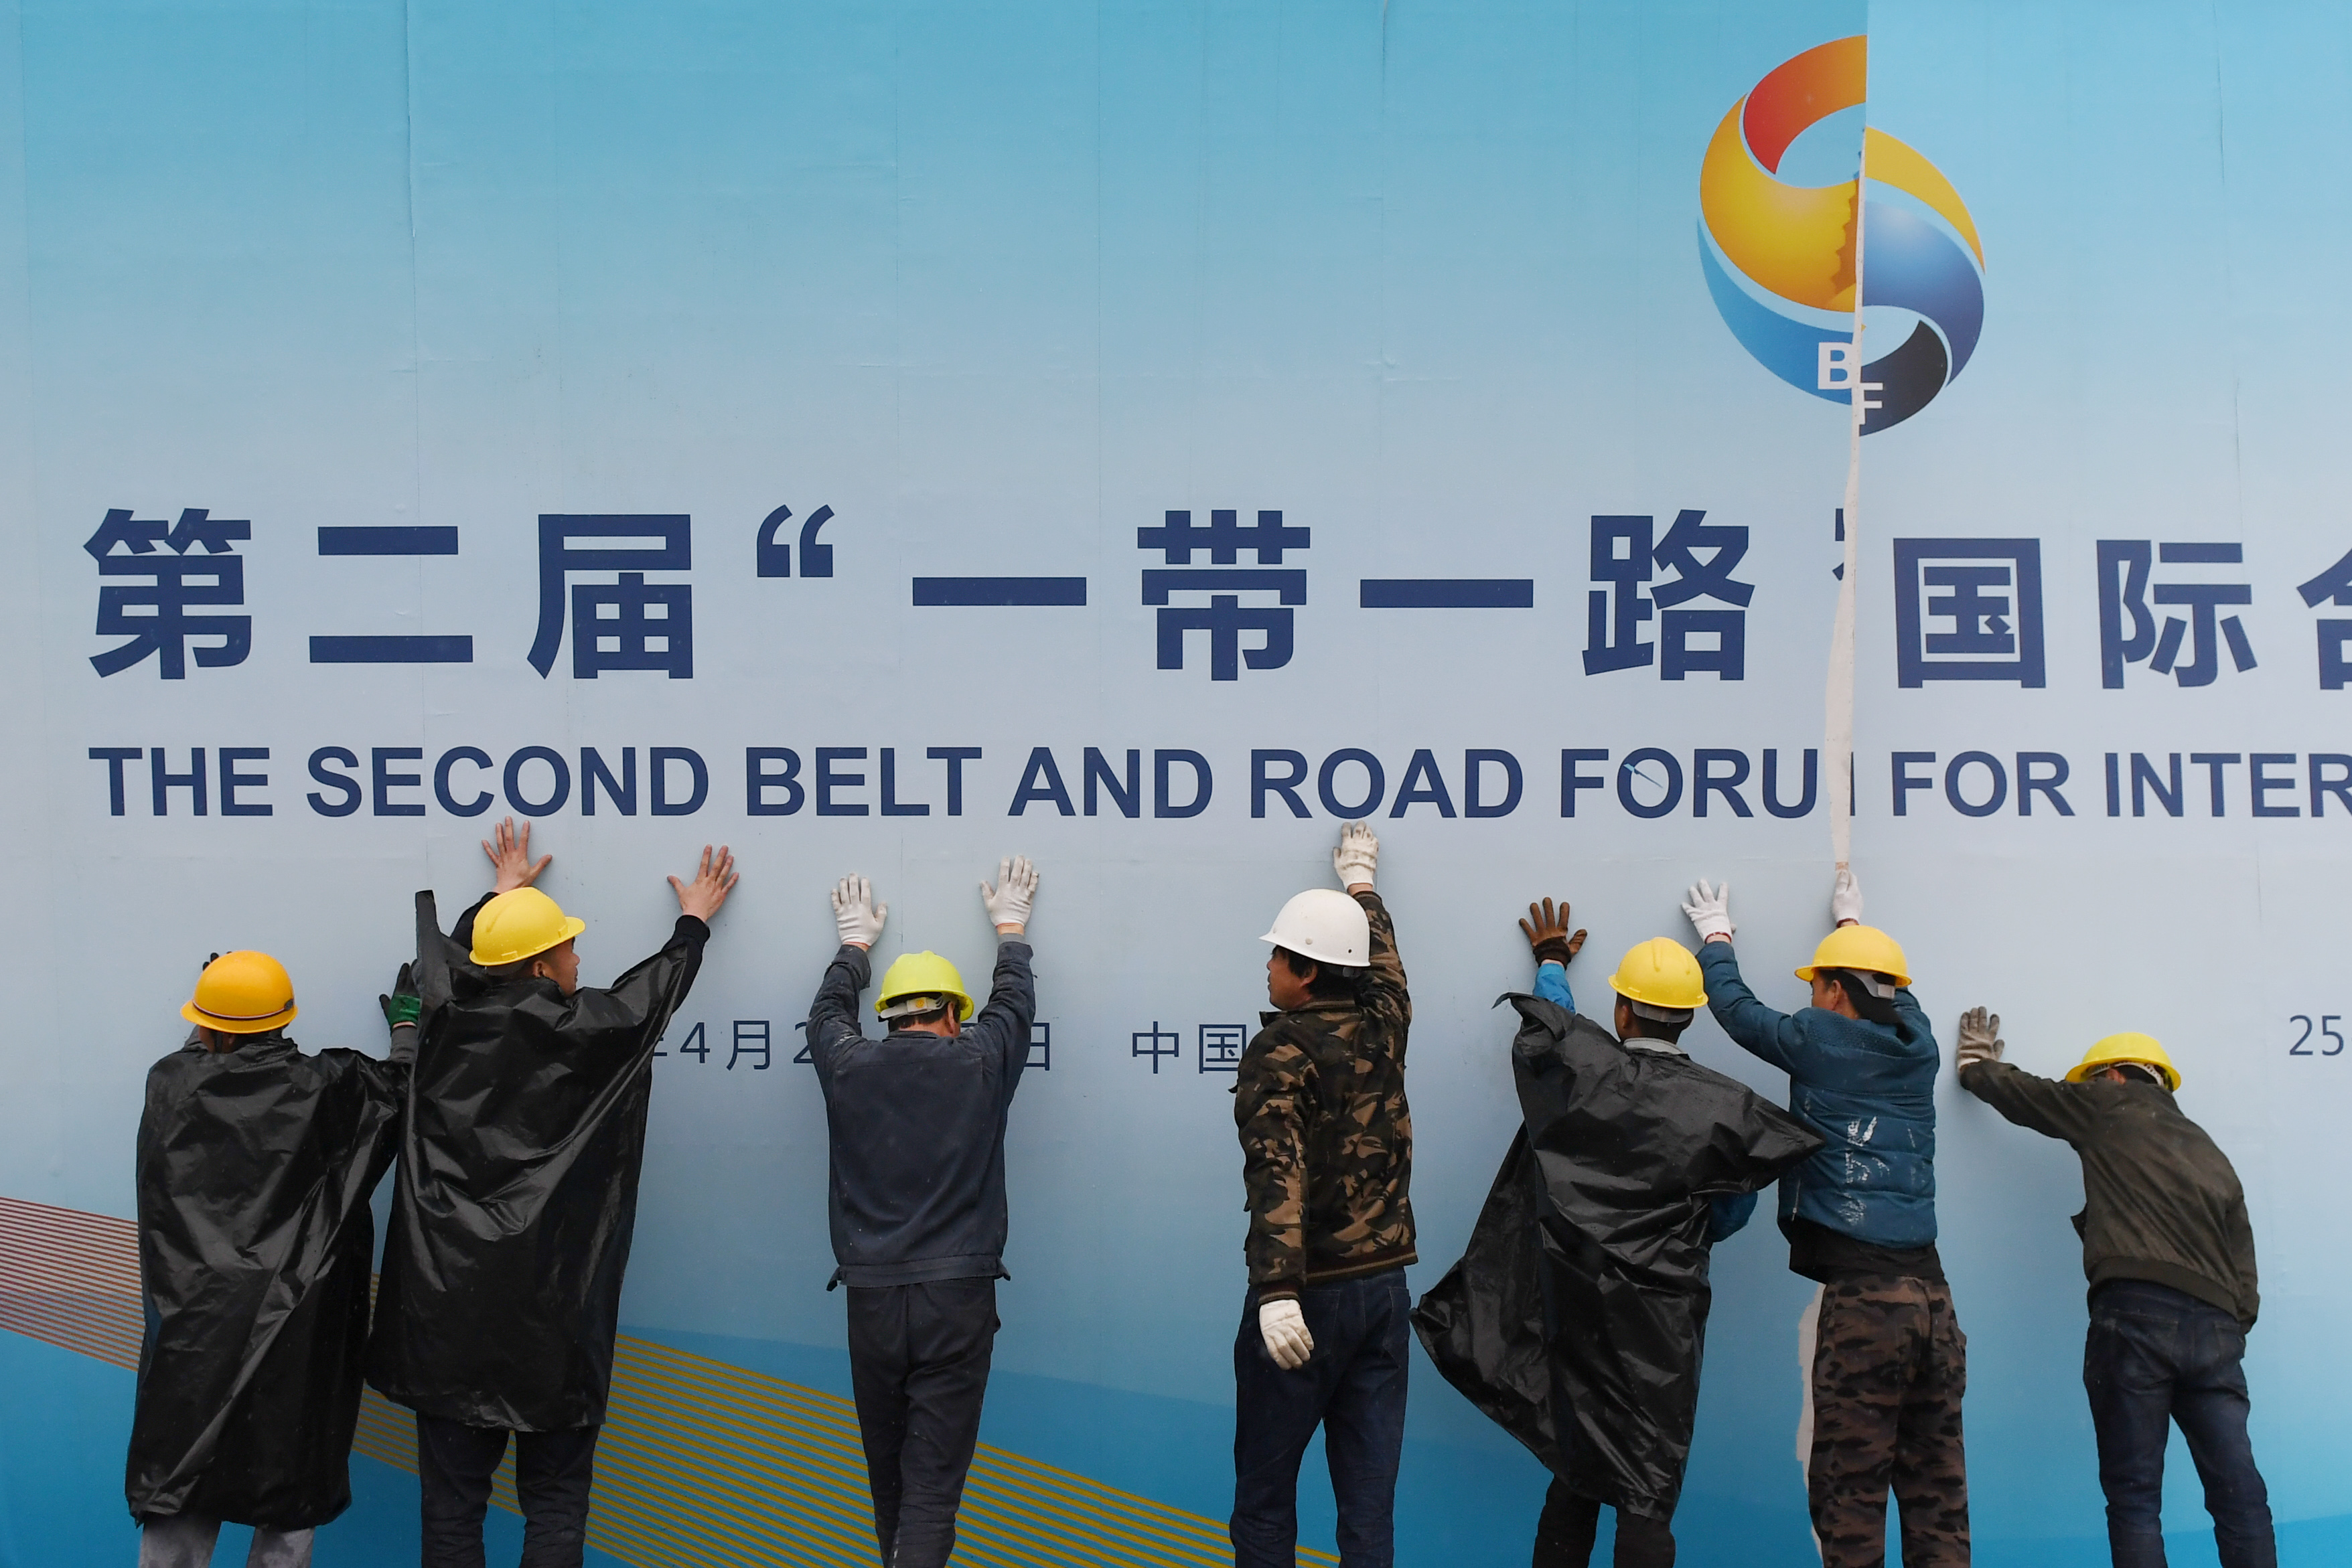 ADB urges caution on China’s ‘Belt and Road’ scheme